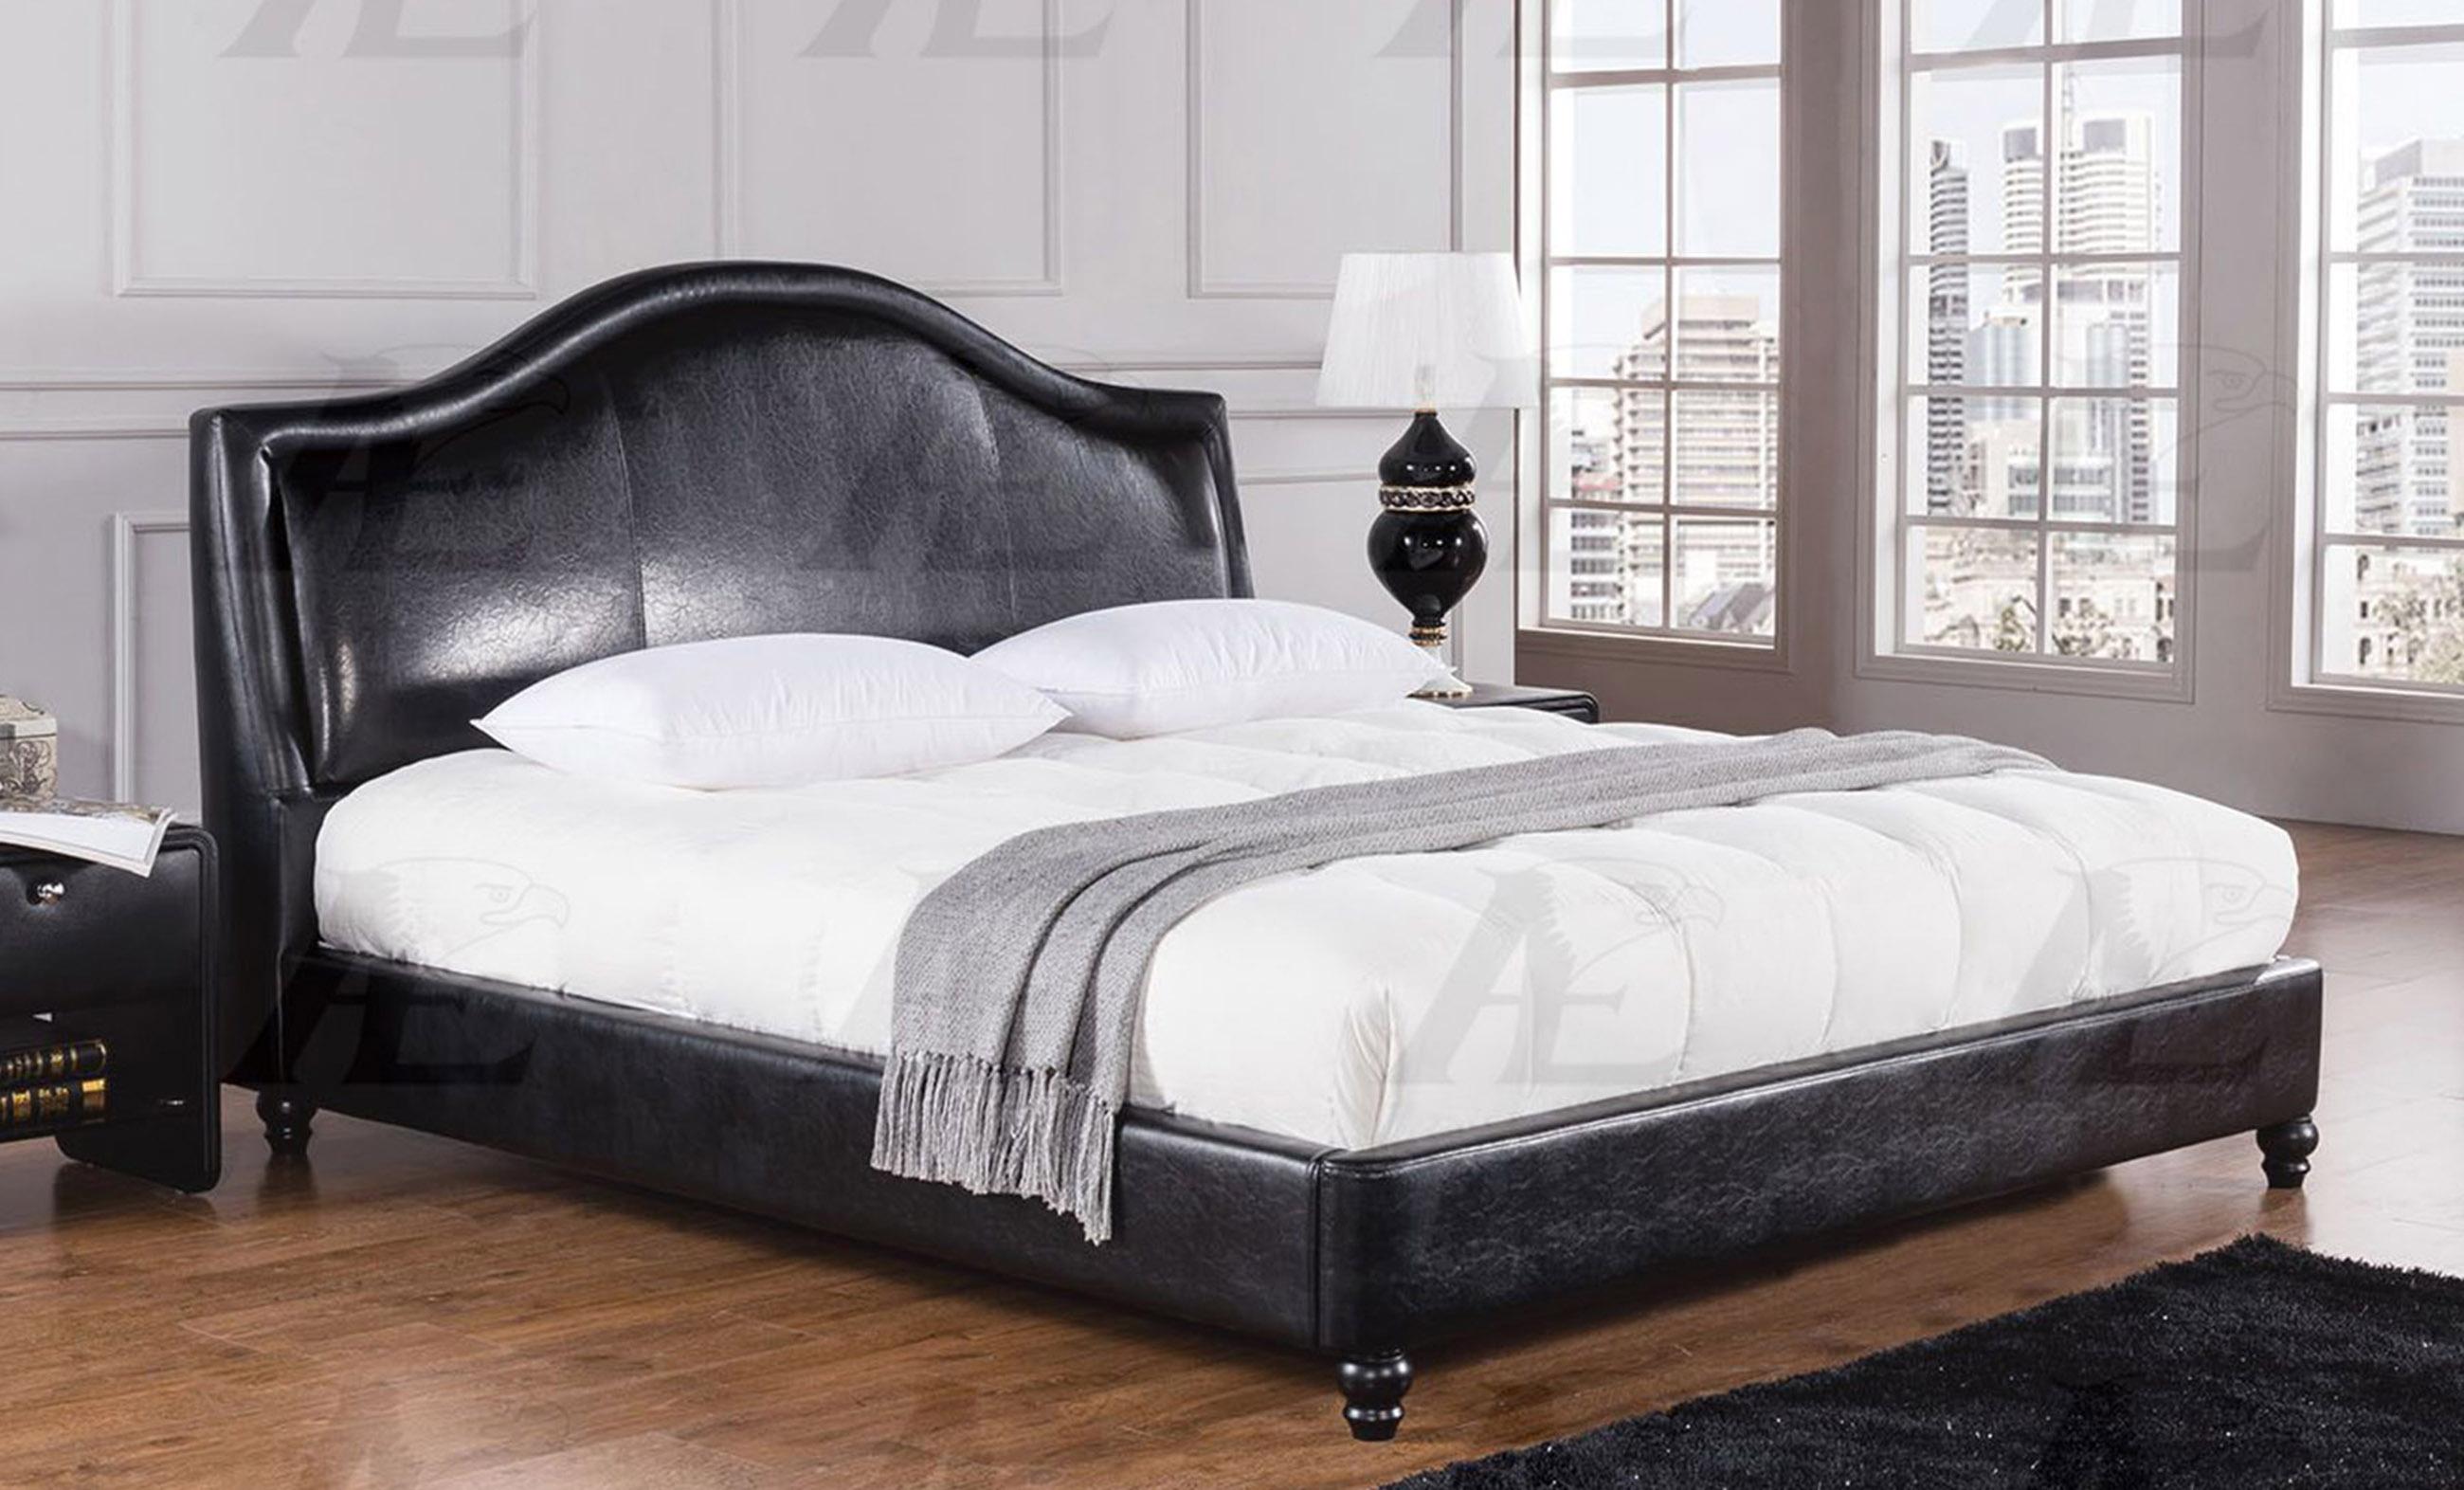 

    
American Eagle Furniture B-D059 Platform Bed Black AE B-D059-EK
